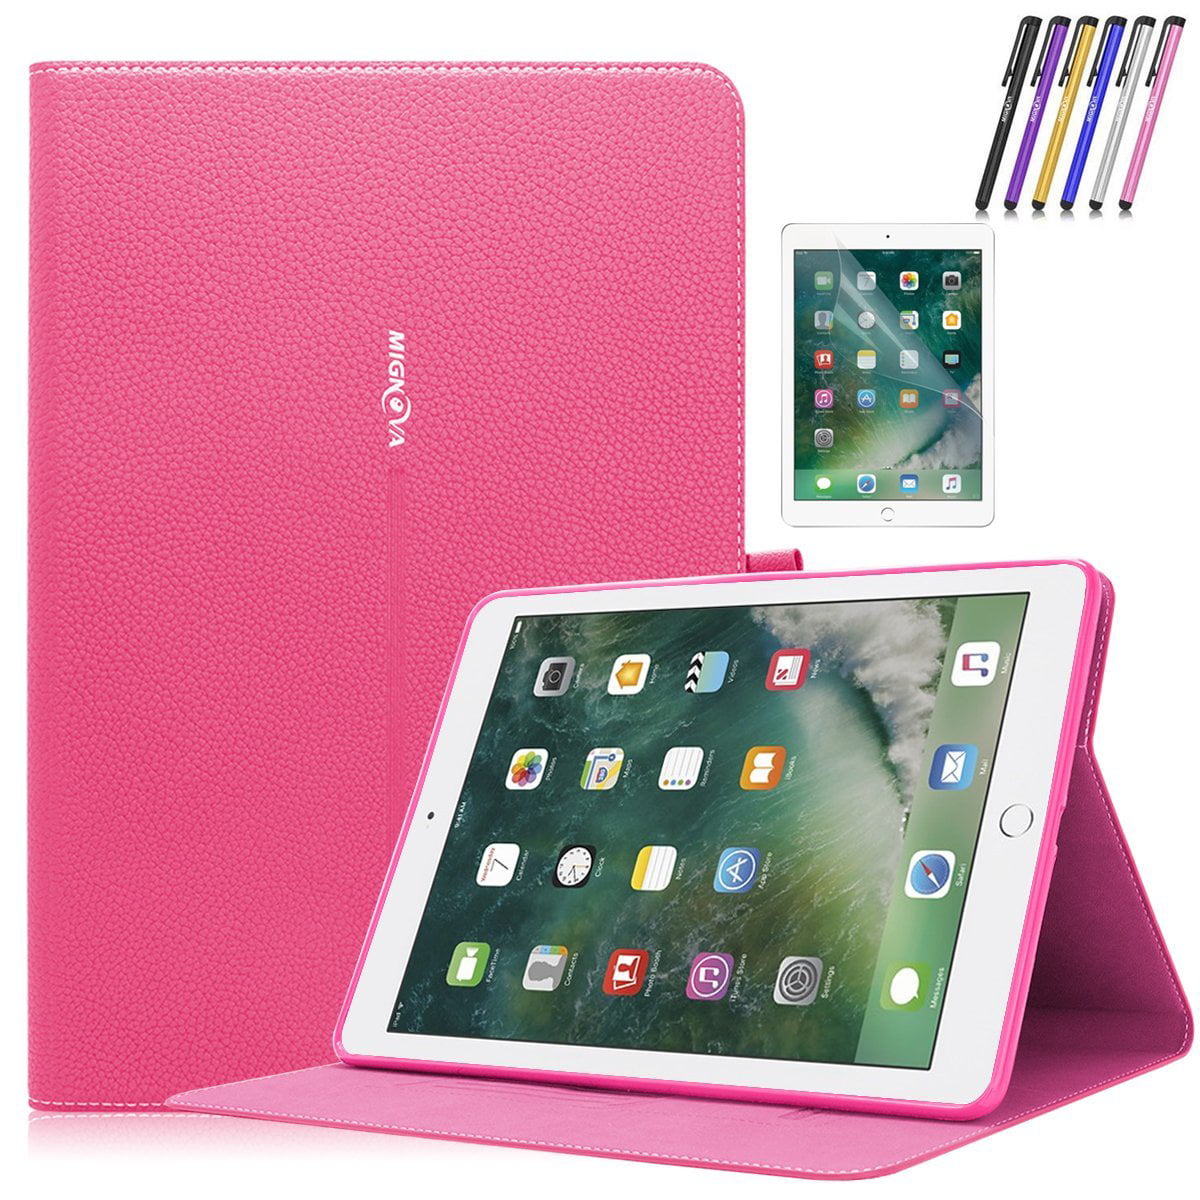 New iPad 9.7 inch Case, Mignova Premium PU Leather Folio Case Smart